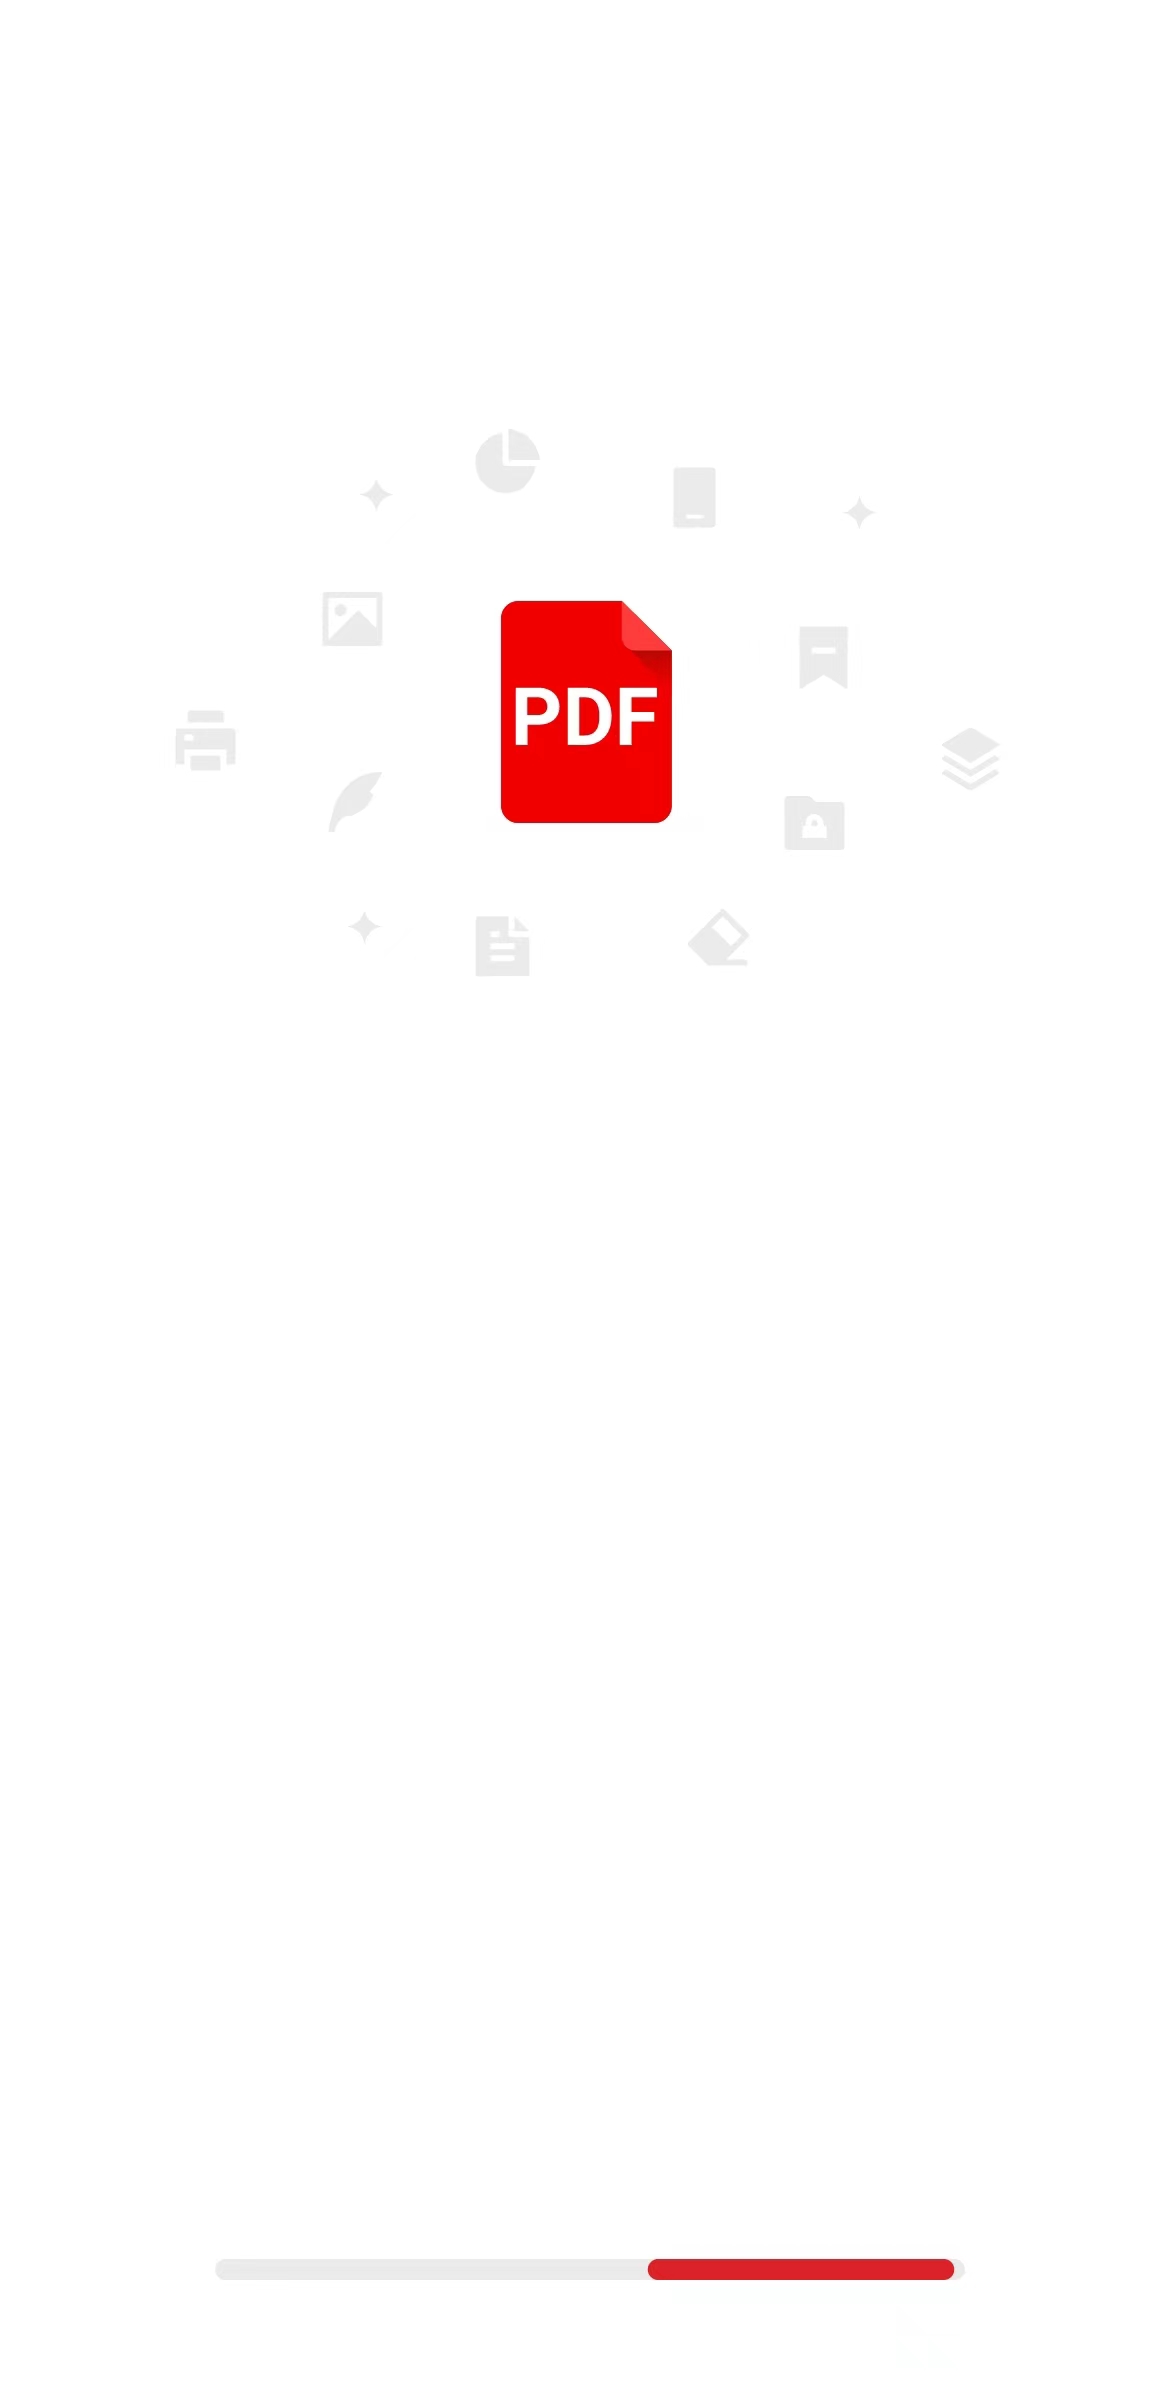 雨齐PDF阅读器app